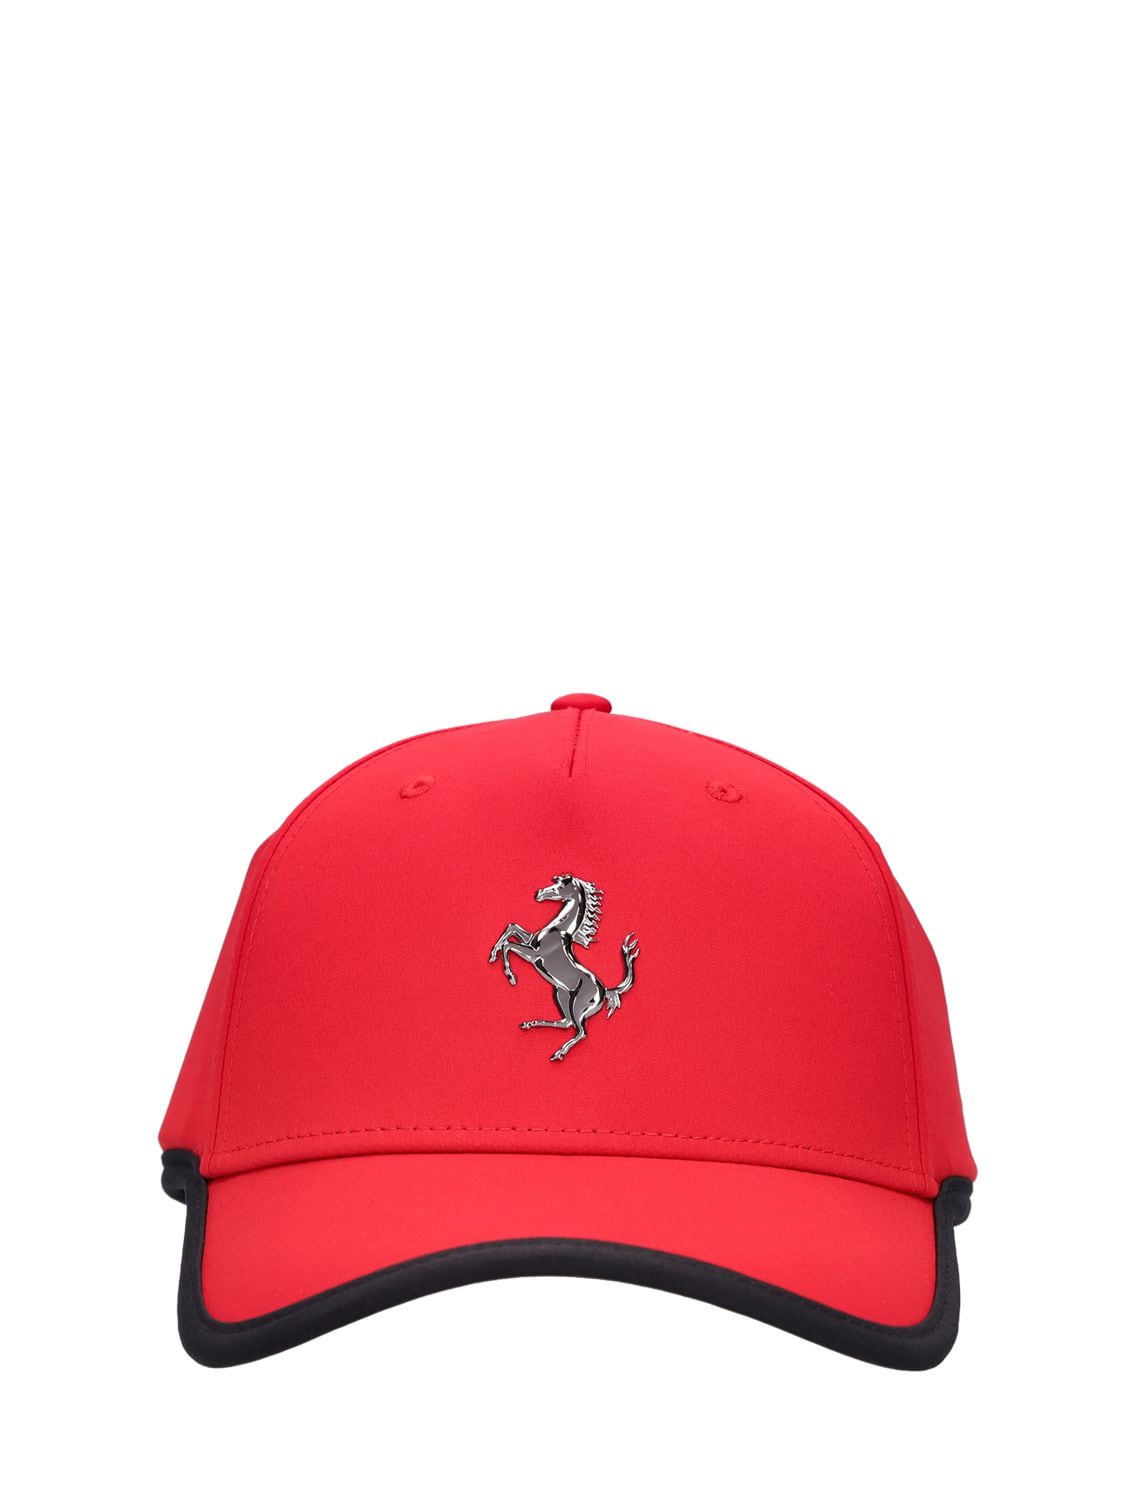 Image of Fully Edged Baseball Cap